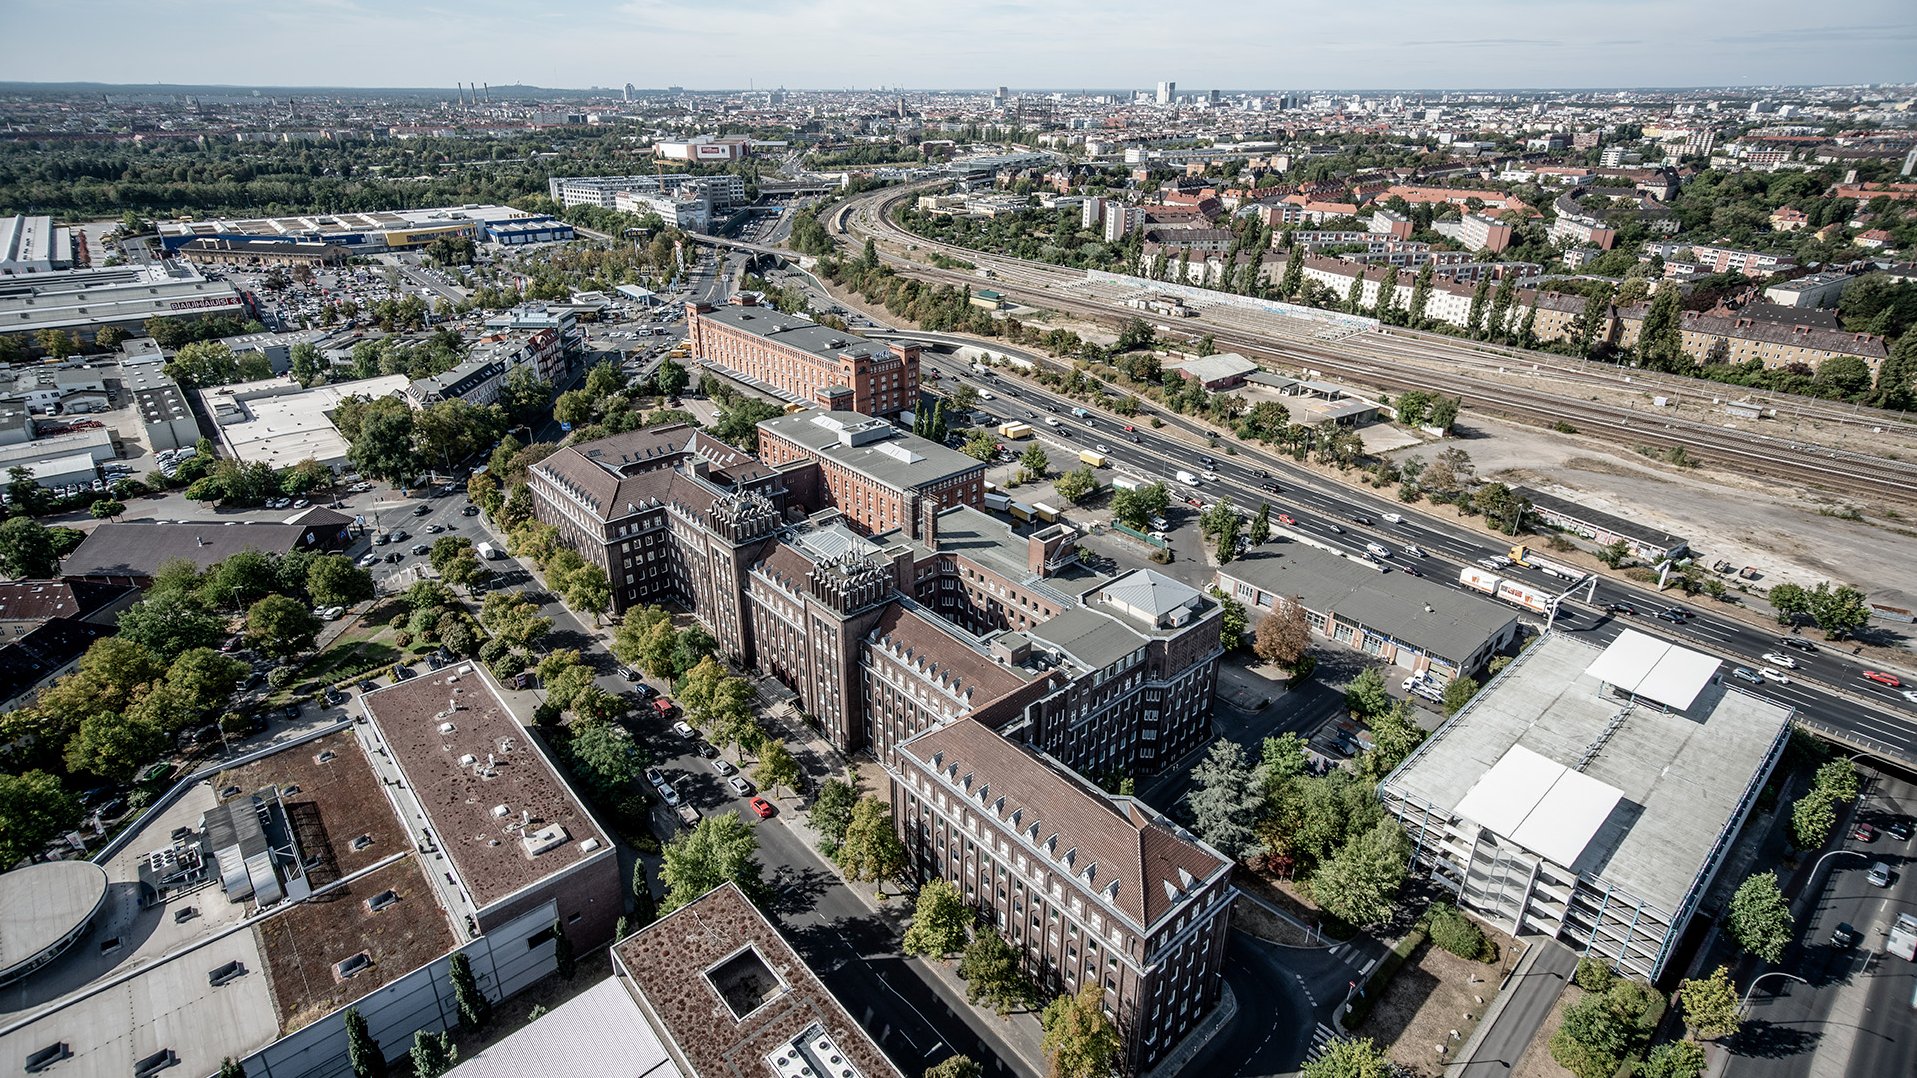 Ringbahnstraße in Berlin, Deutschland